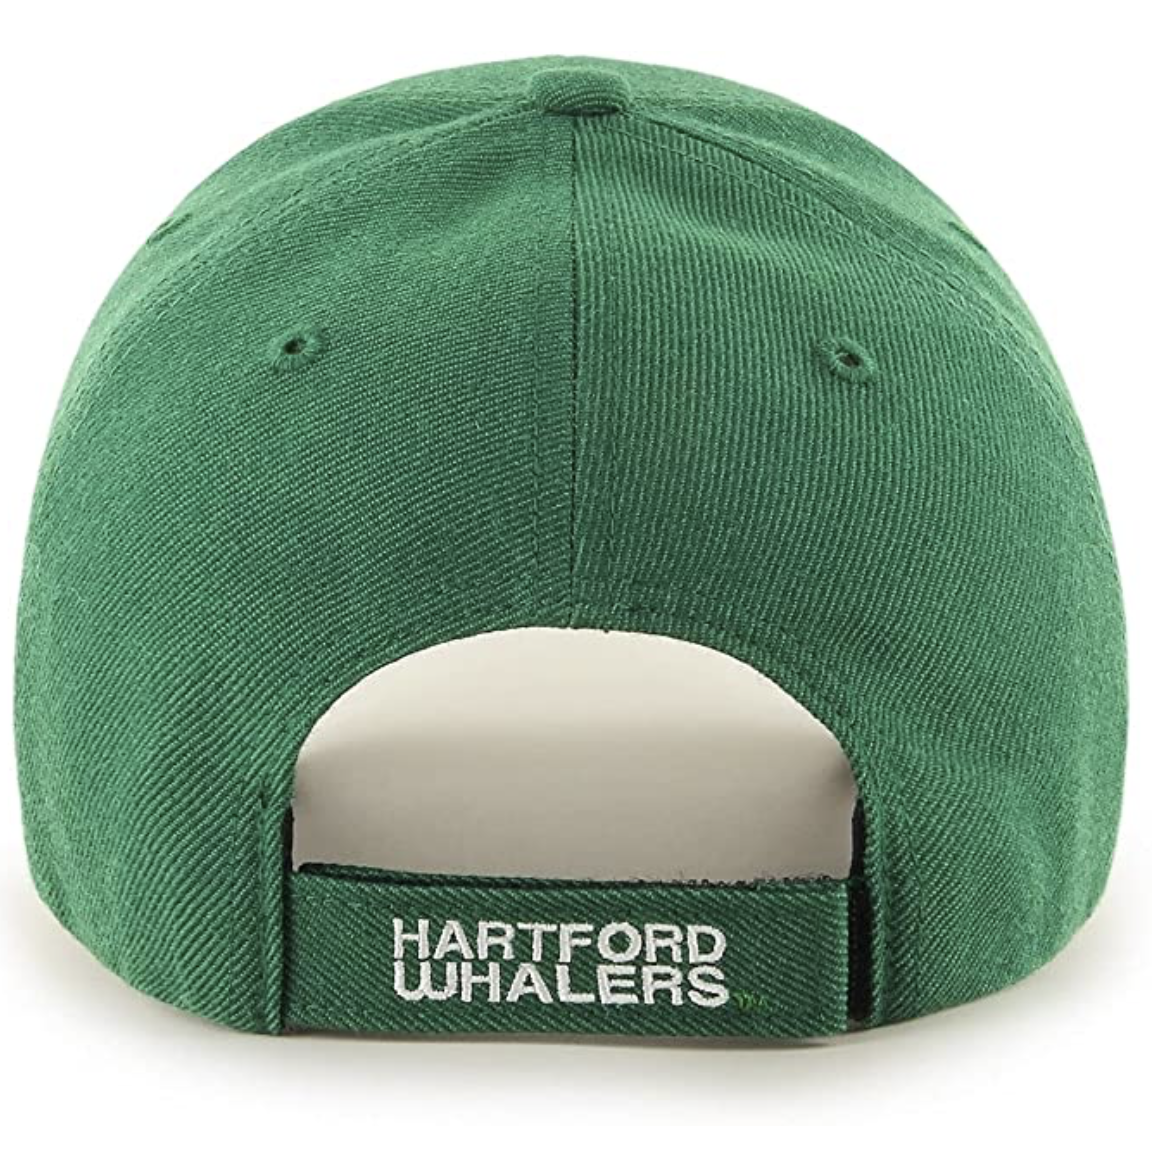 '47 Brand - Vintage Hartford Whalers Cap - Green